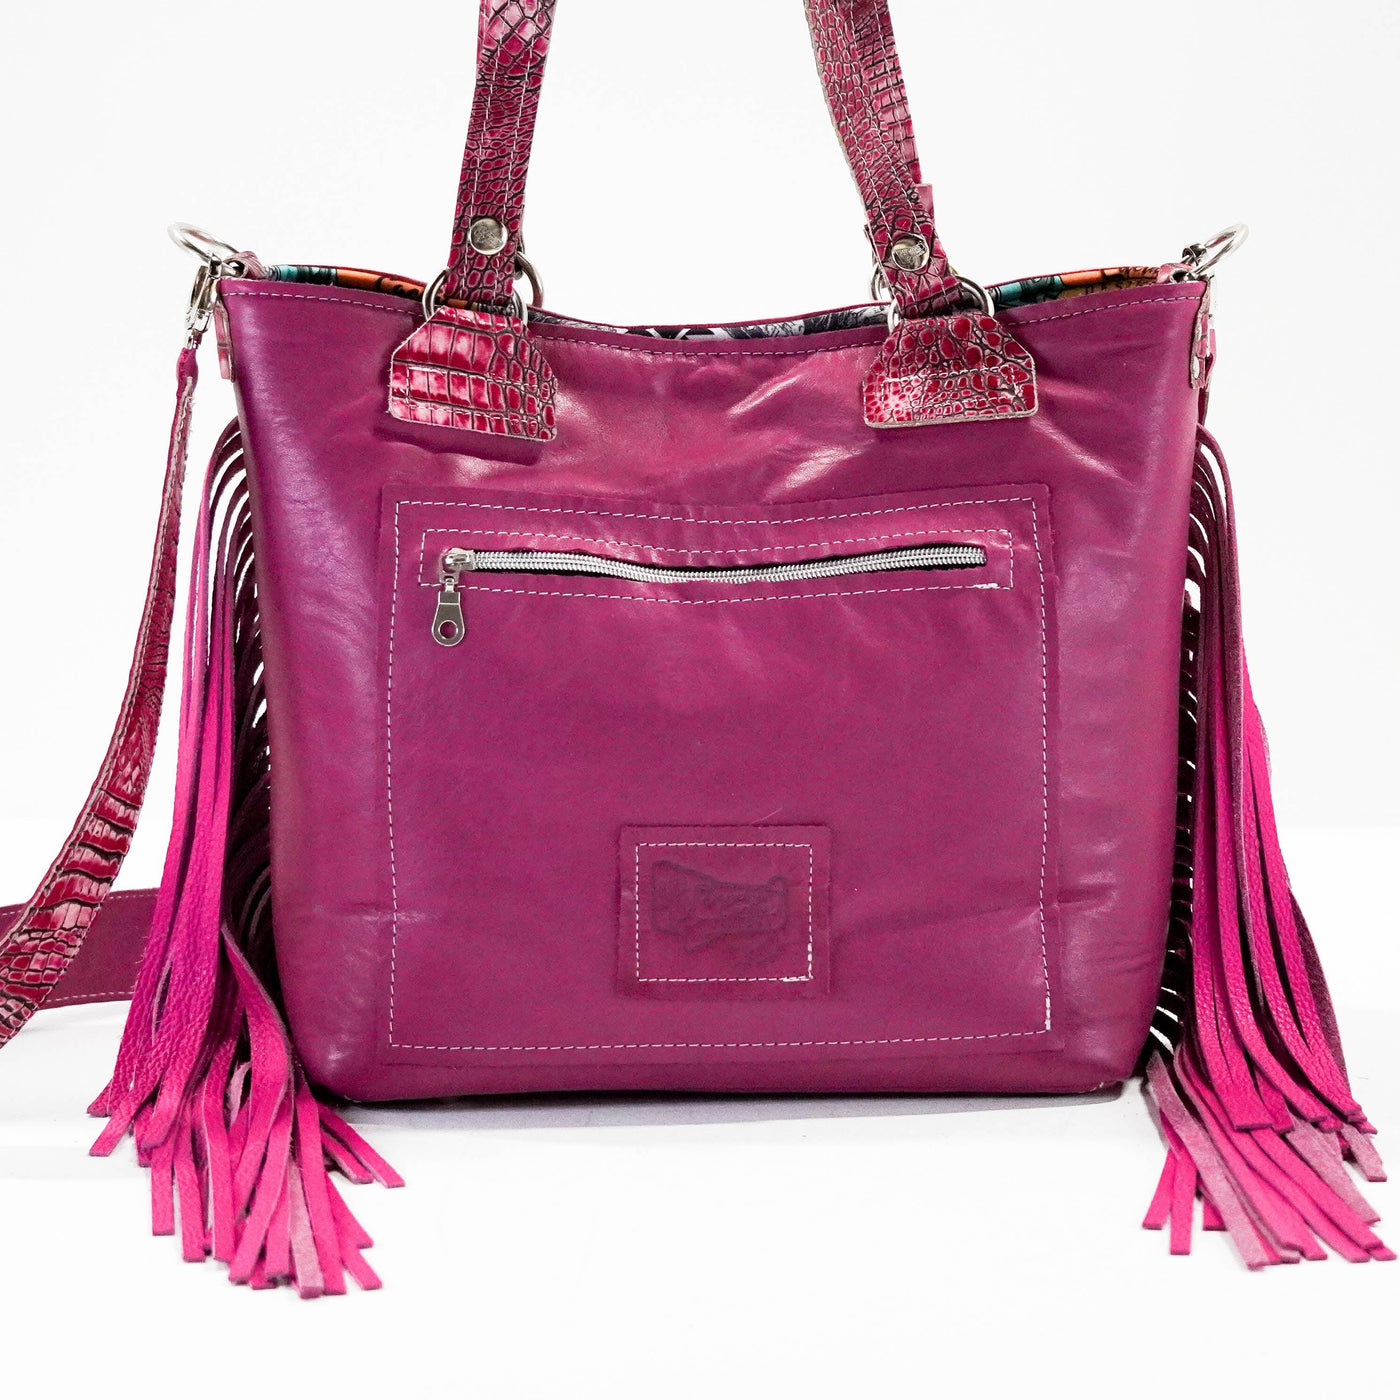 Taylor - Pink Acid w/ Barbie Croc-Taylor-Western-Cowhide-Bags-Handmade-Products-Gifts-Dancing Cactus Designs